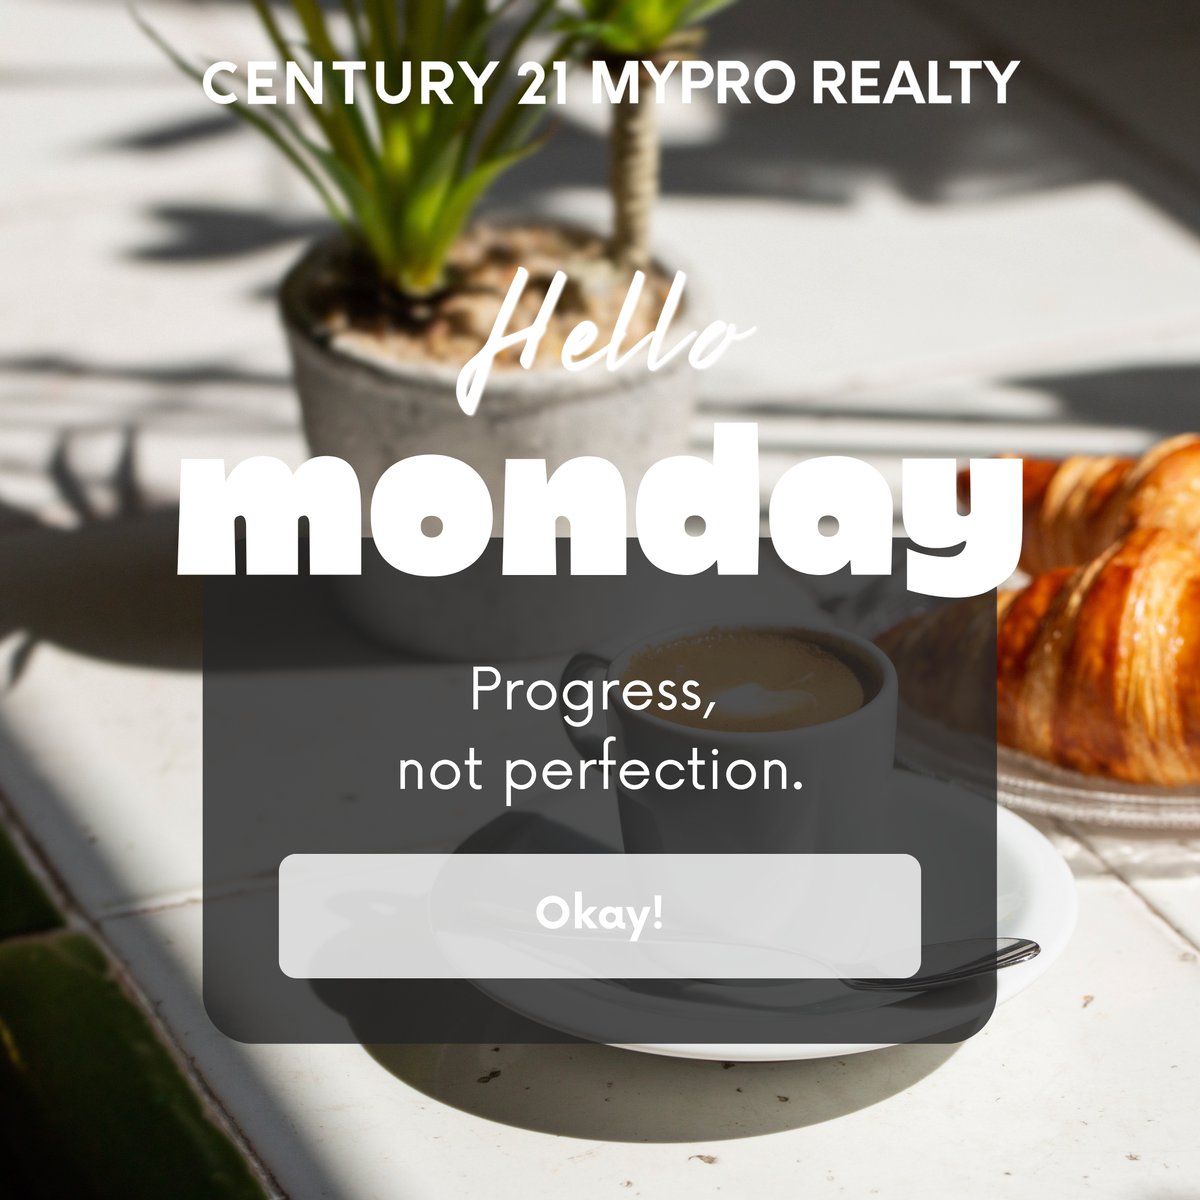 🌟 Monday Motivation 🌟

✨ 'Progress, not perfection' 🌱

#TorontoRealEstate #TorontoHomes #TorontoRealtor #TorontoProperties #GTARealEstate #TorontoLiving #TorontoCommunity #TorontoEvents #RealEstateLife #HomeBuying #PropertyInvestment